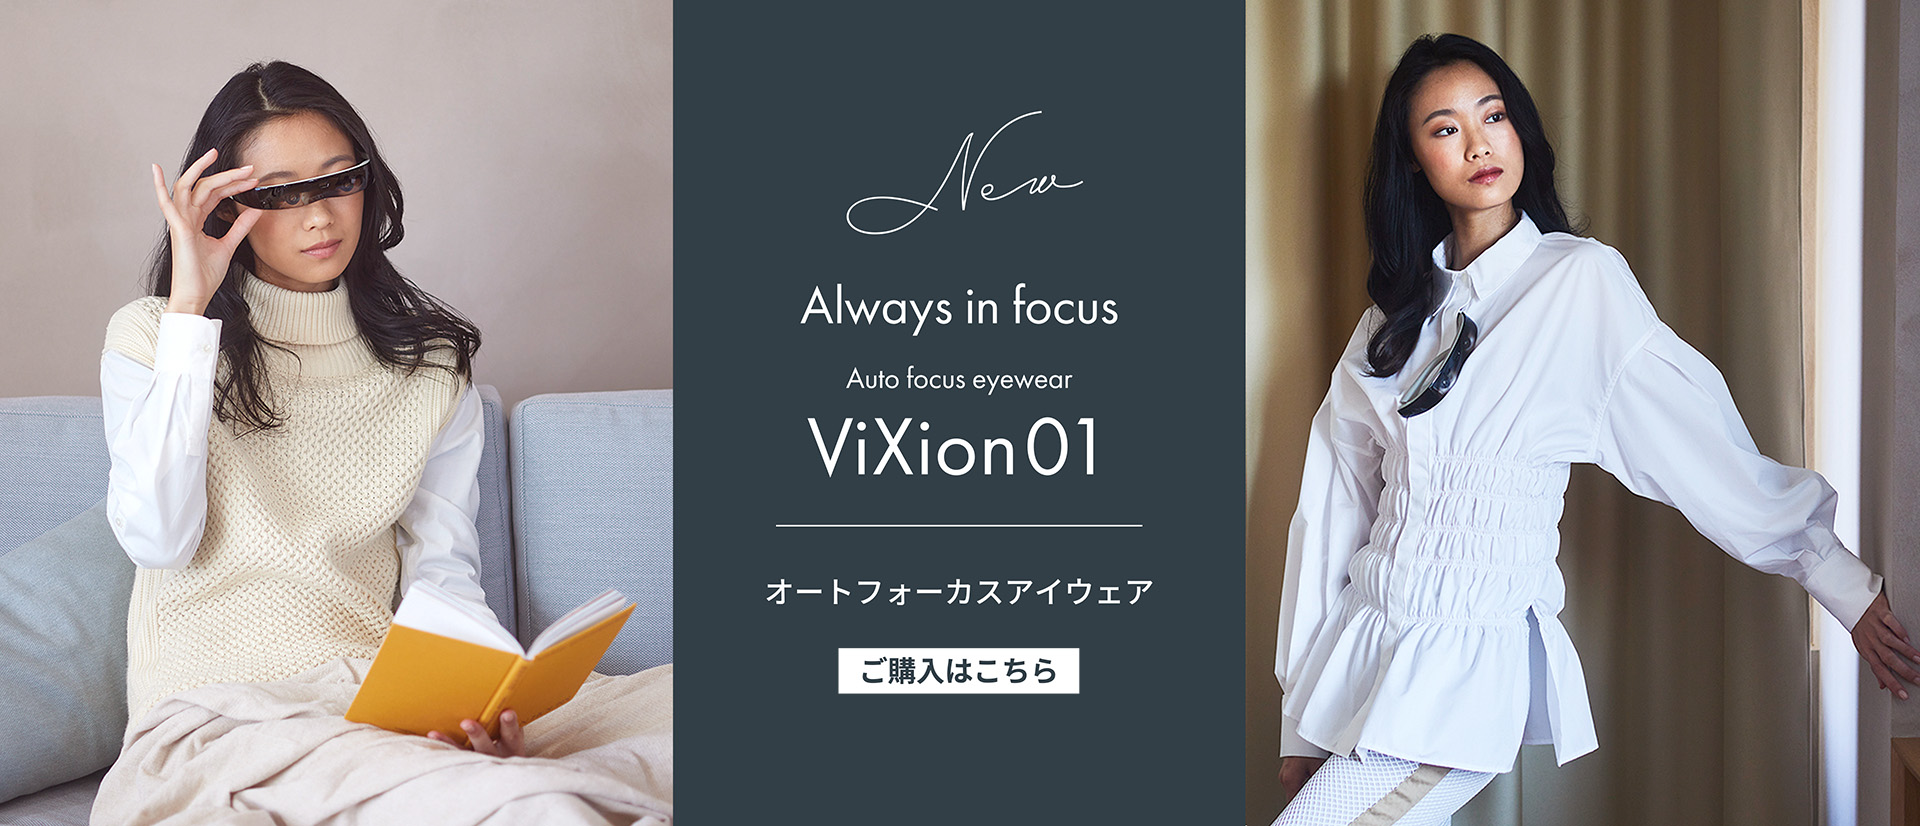 Autofocus eyewear ViXion01